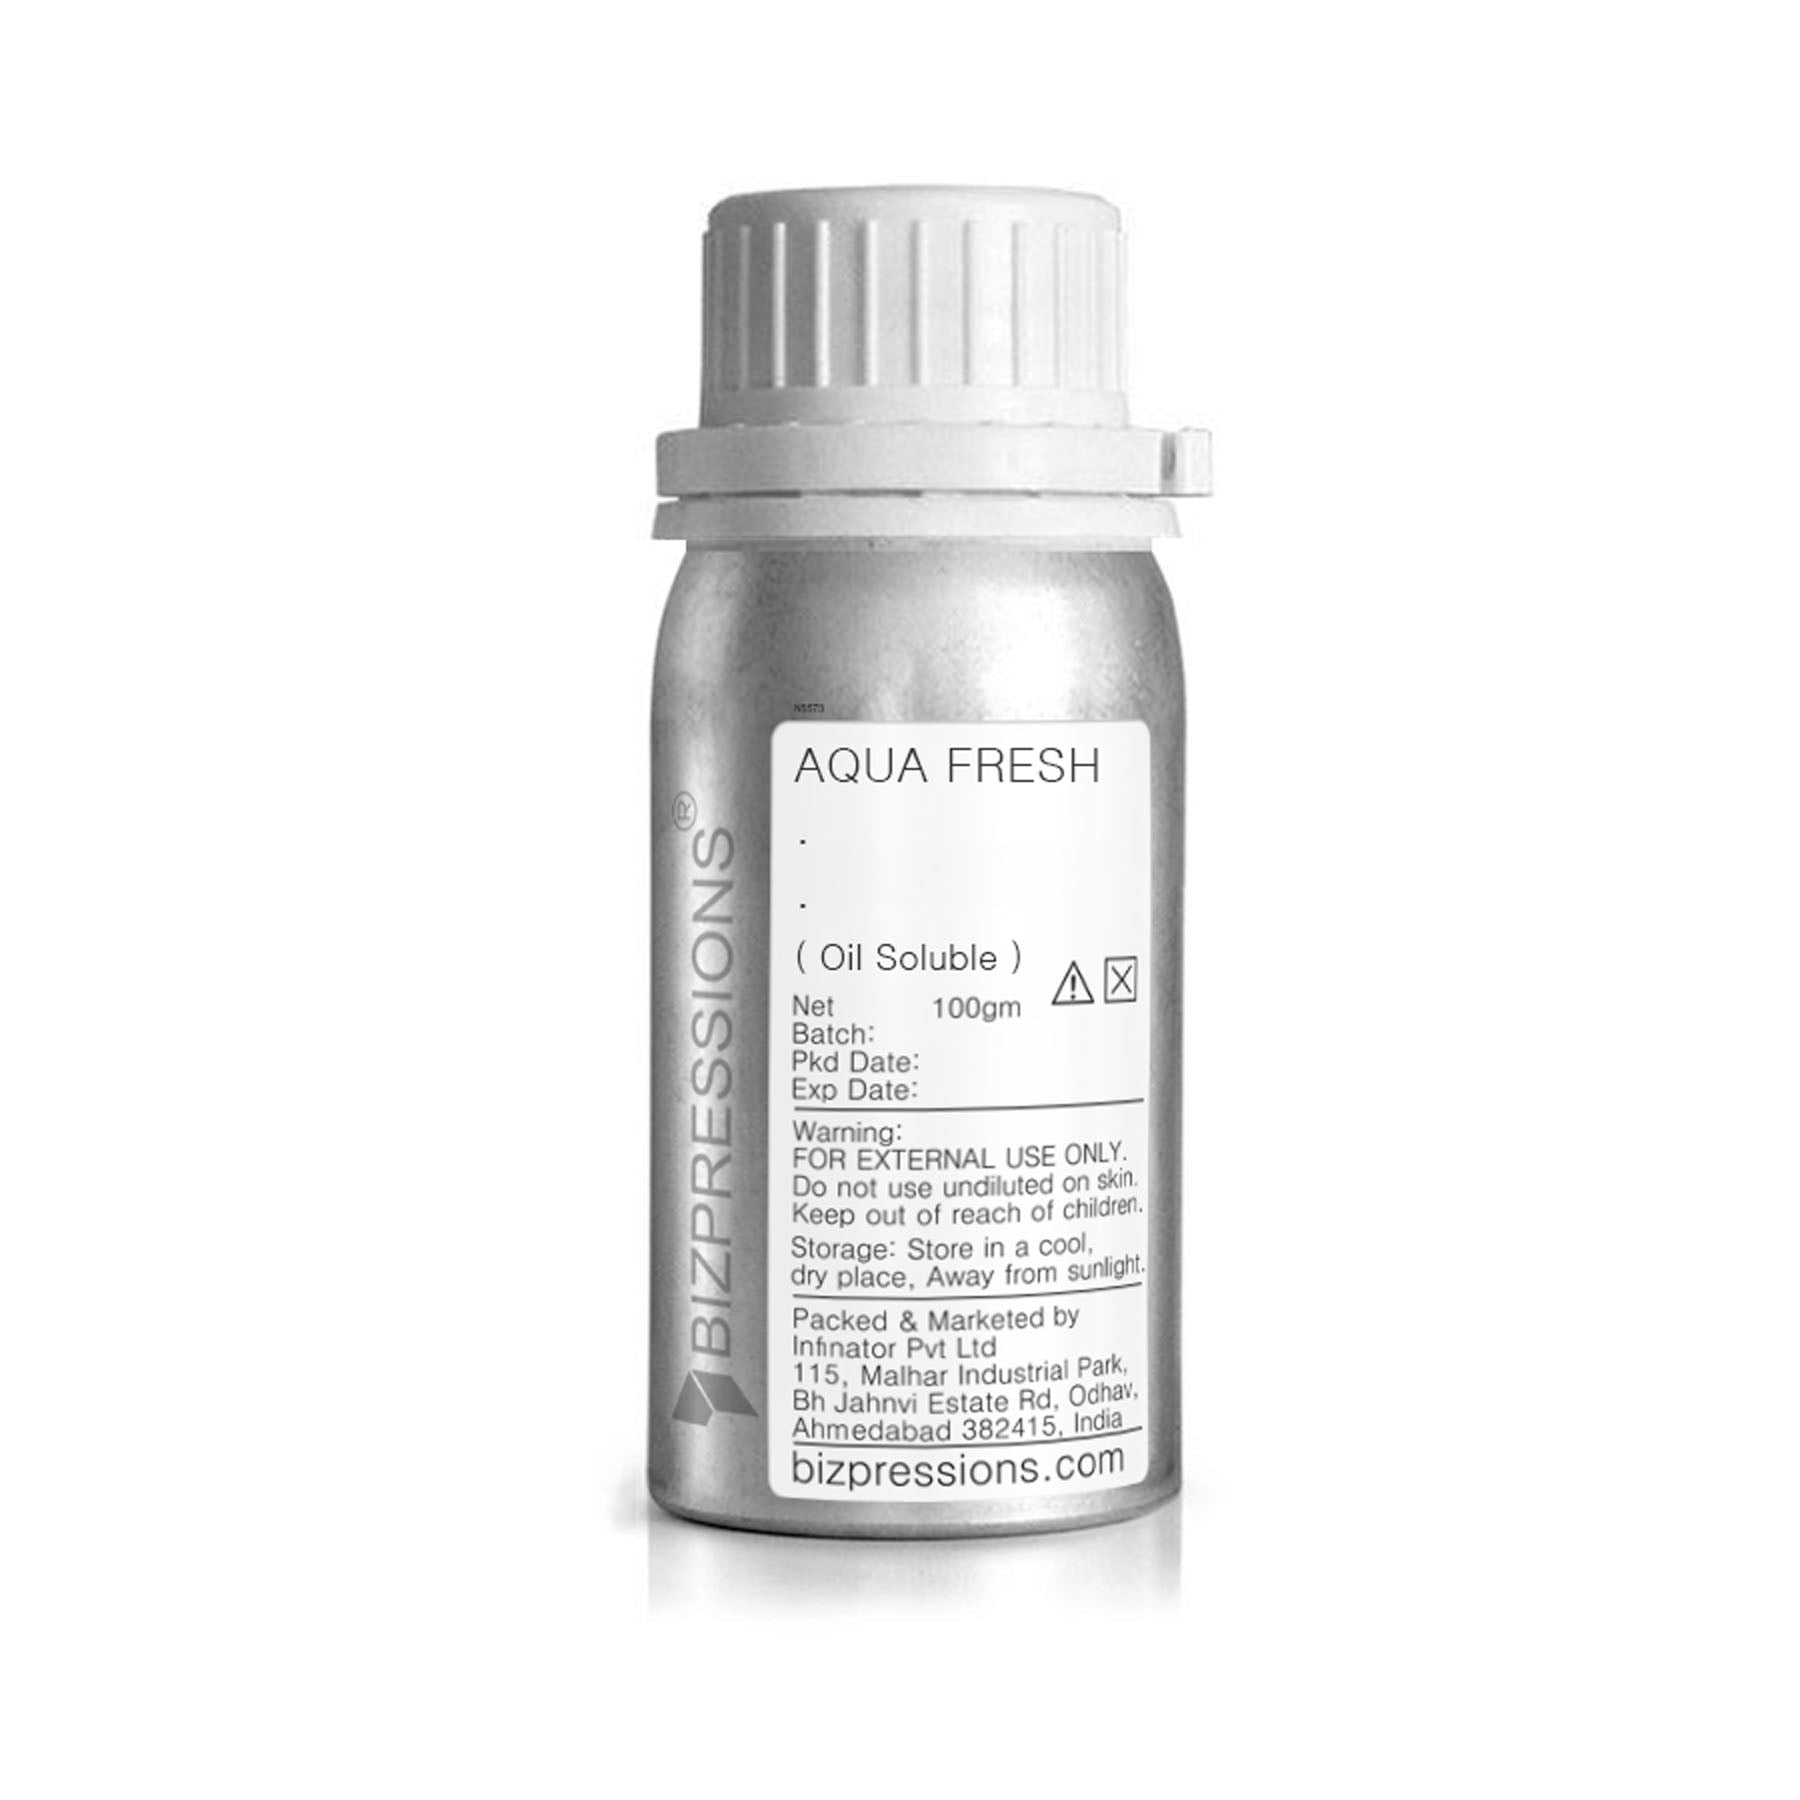 AQUA FRESH - Fragrance ( Oil Soluble ) - 100 gm